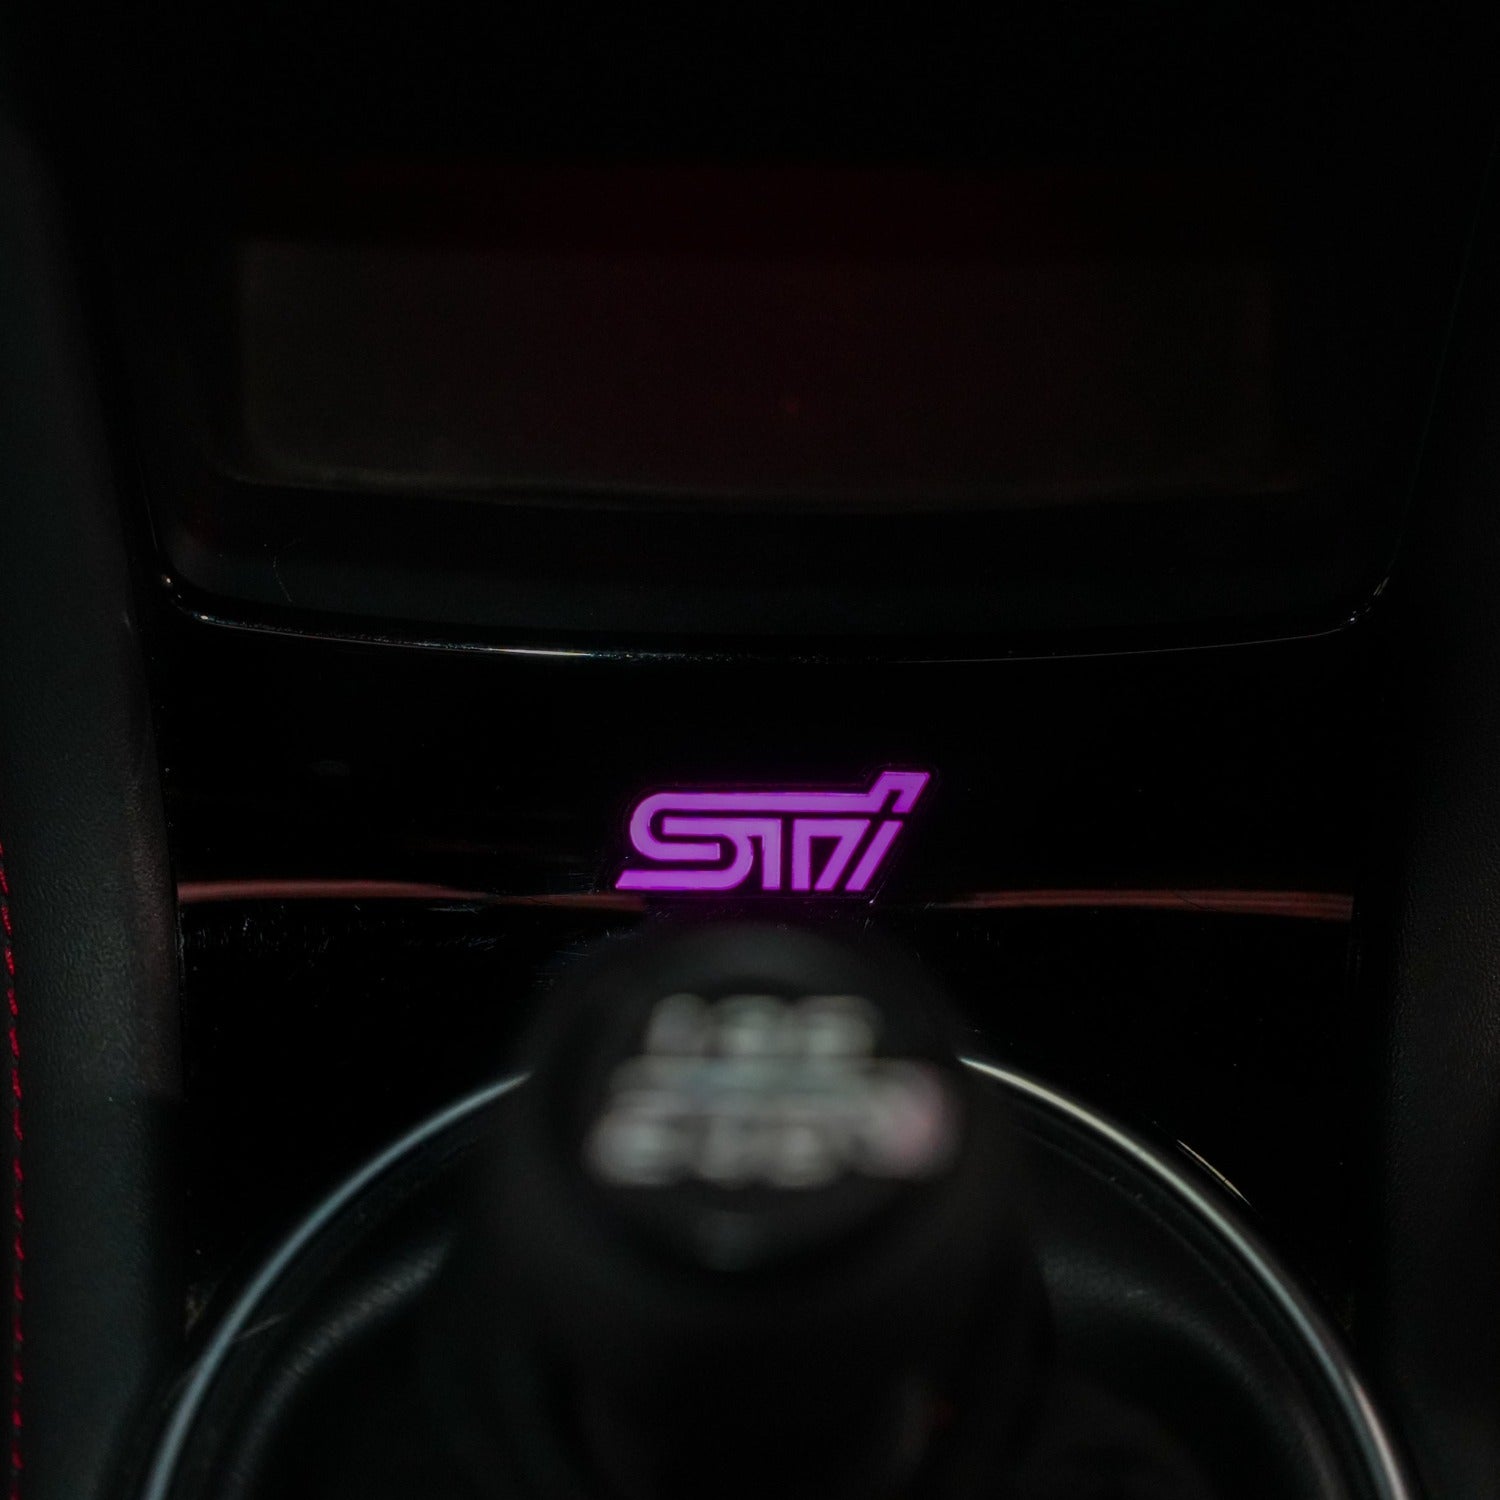 Insignia de ajuste de palanca de cambios STI con logotipos iluminados 2008-2021 STI